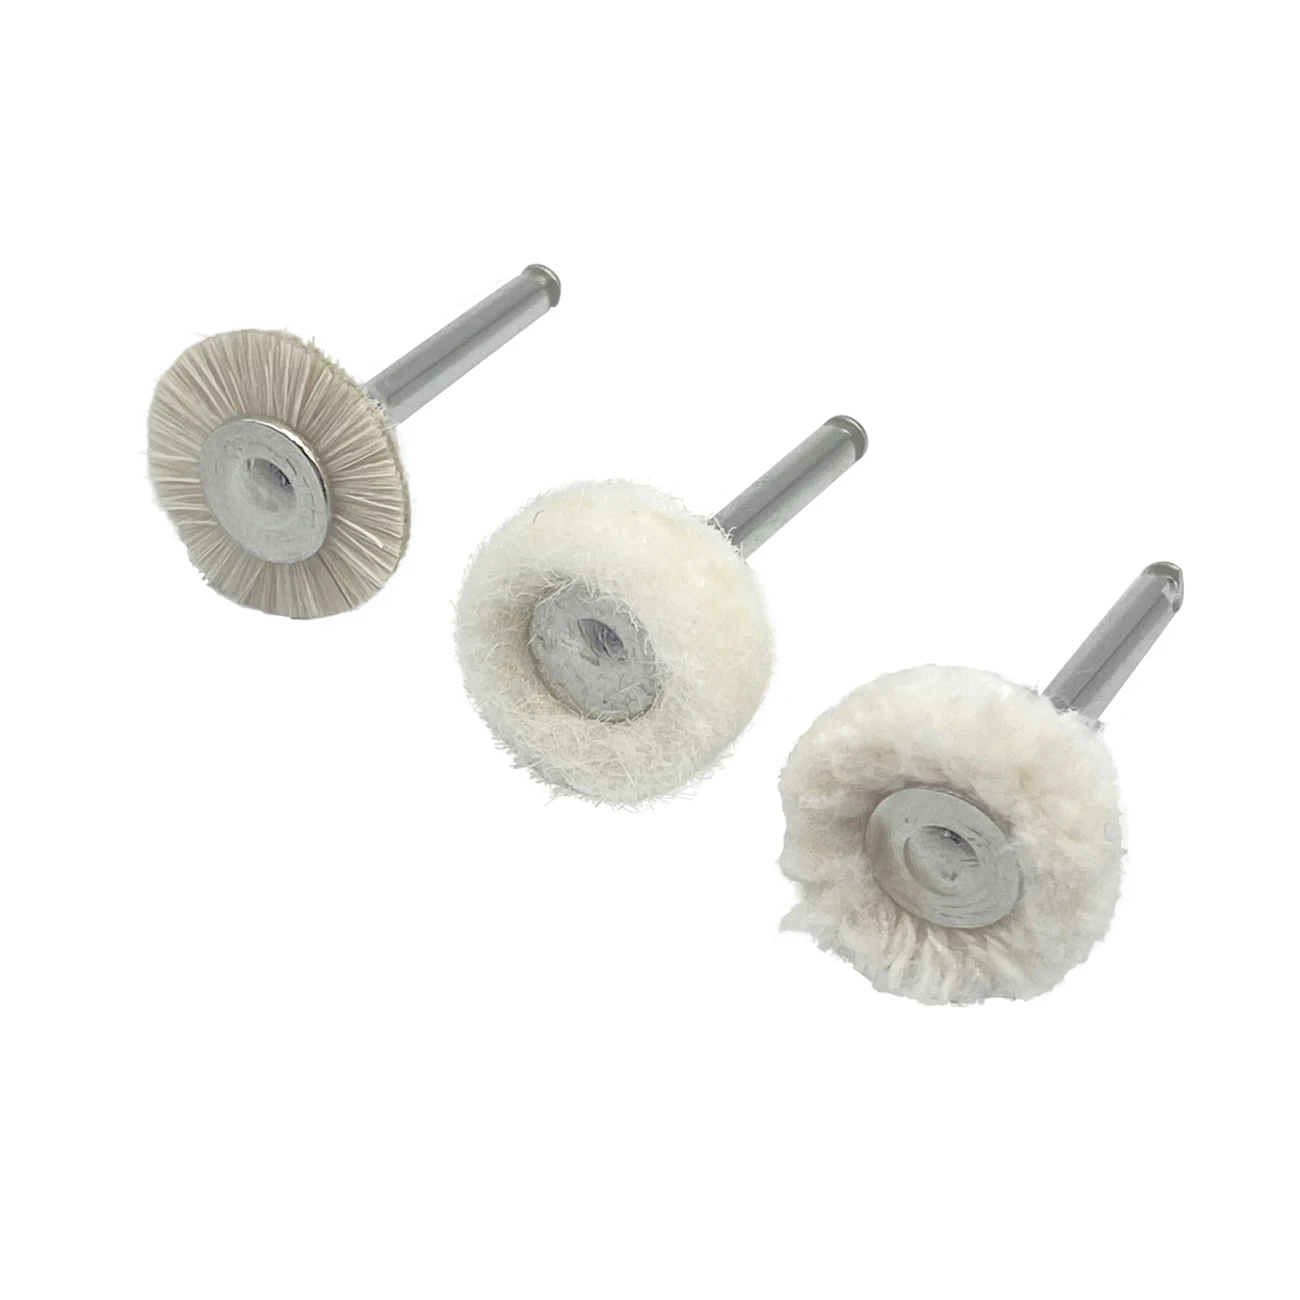 5pcs RA Shank Dental Polishing Brush Drill Wheel Materials Cotton Felt Goat Wool Alumina Tools Dia 10mm Handpiece Rotary Tools